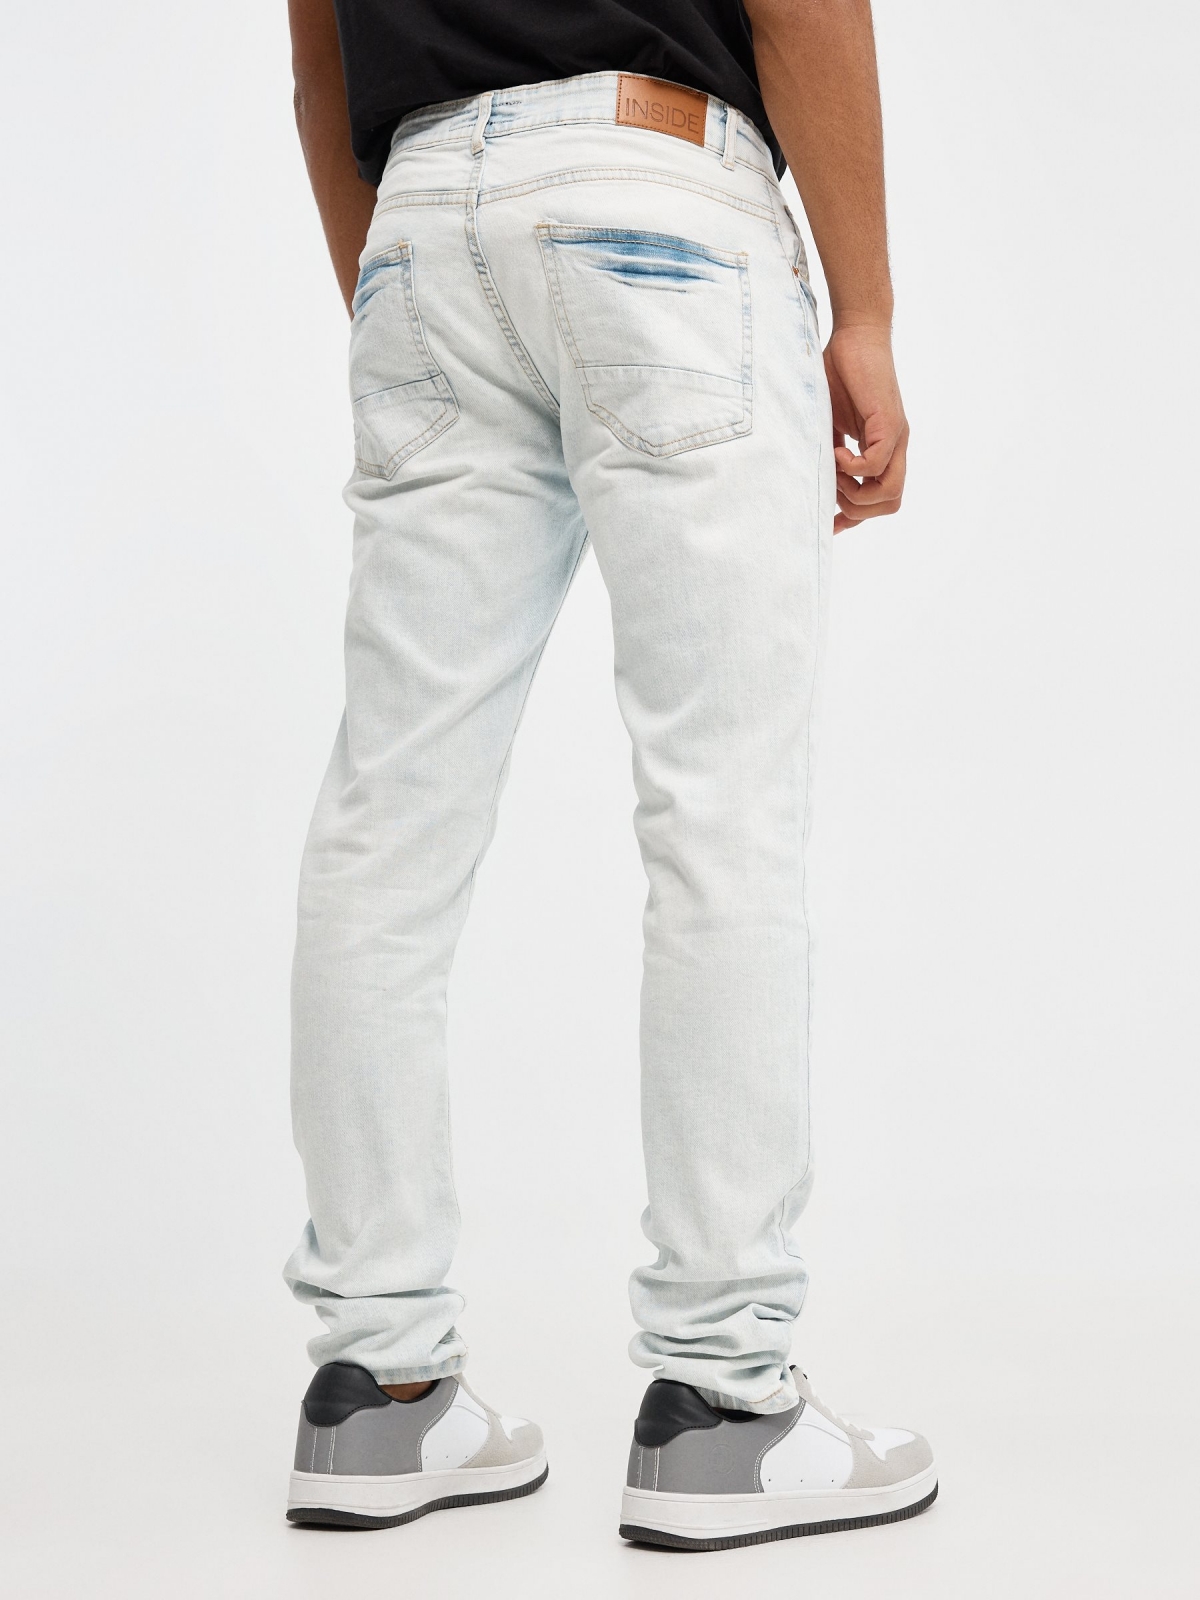 Jeans super slim azul claro azul vista media trasera